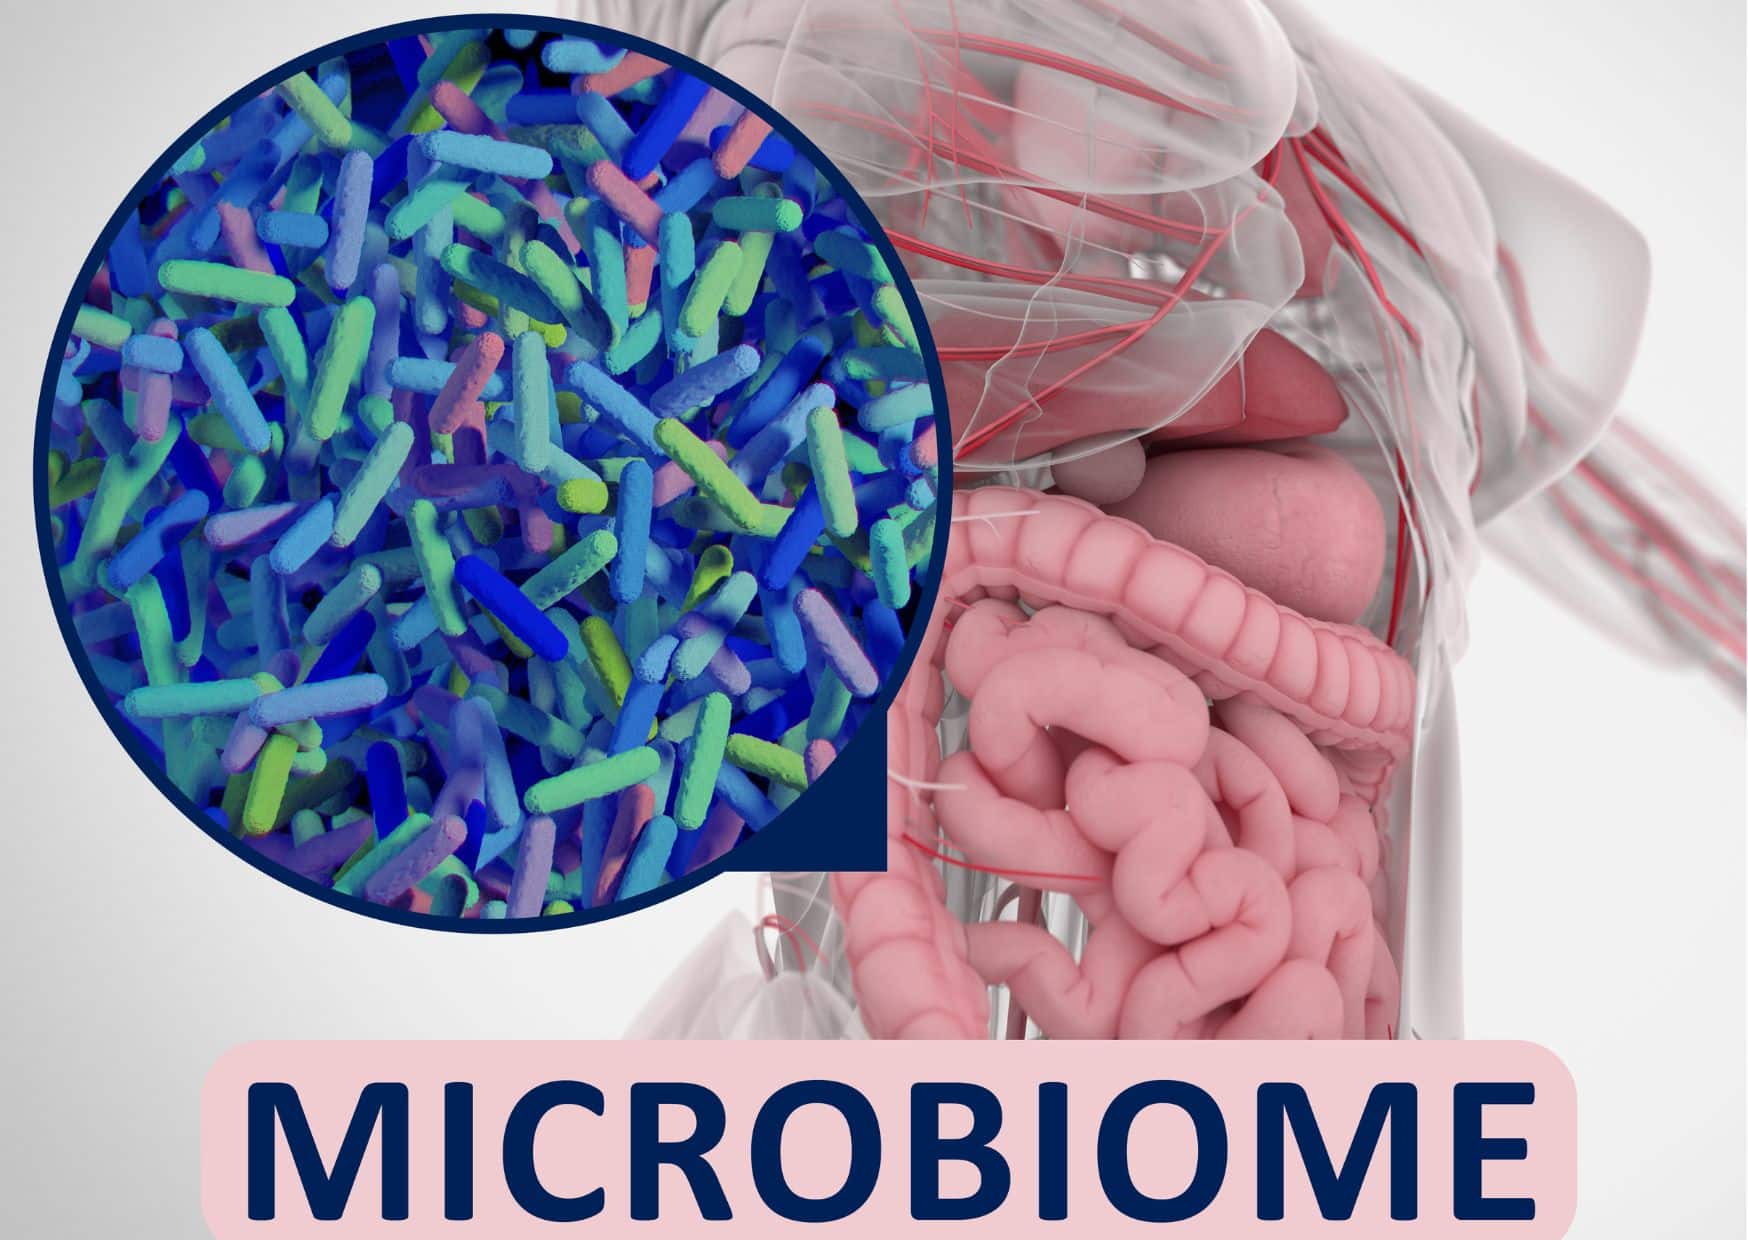 Microbiome health